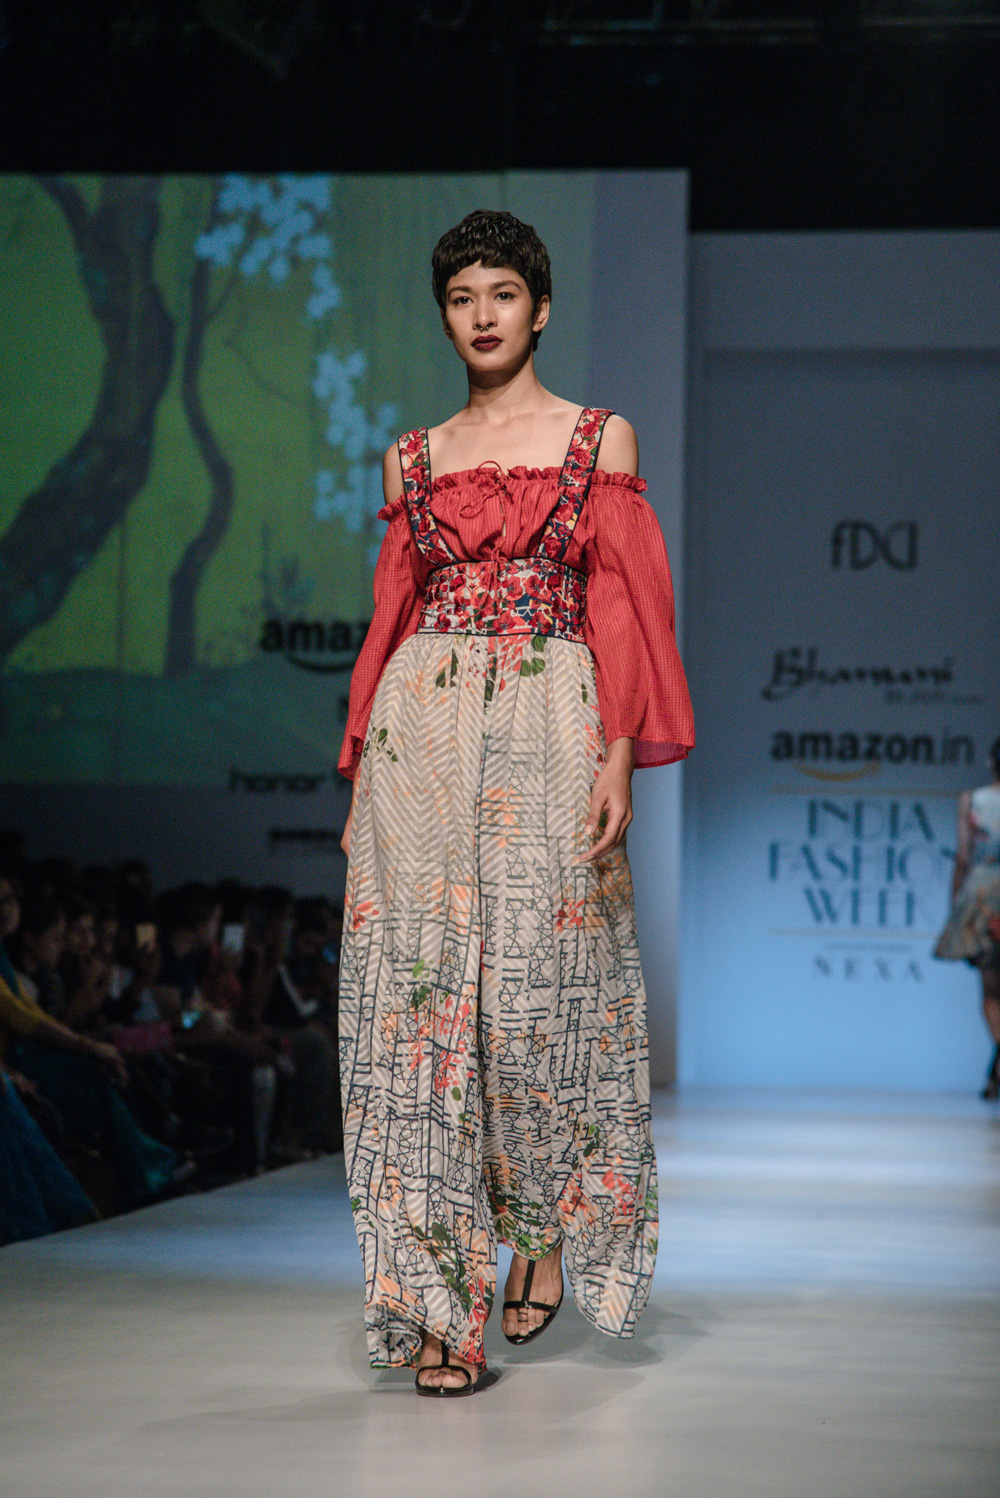 Bhanuni by Jyoti FDCI Amazon India Fashion Week Spring Summer 2018 Look 4